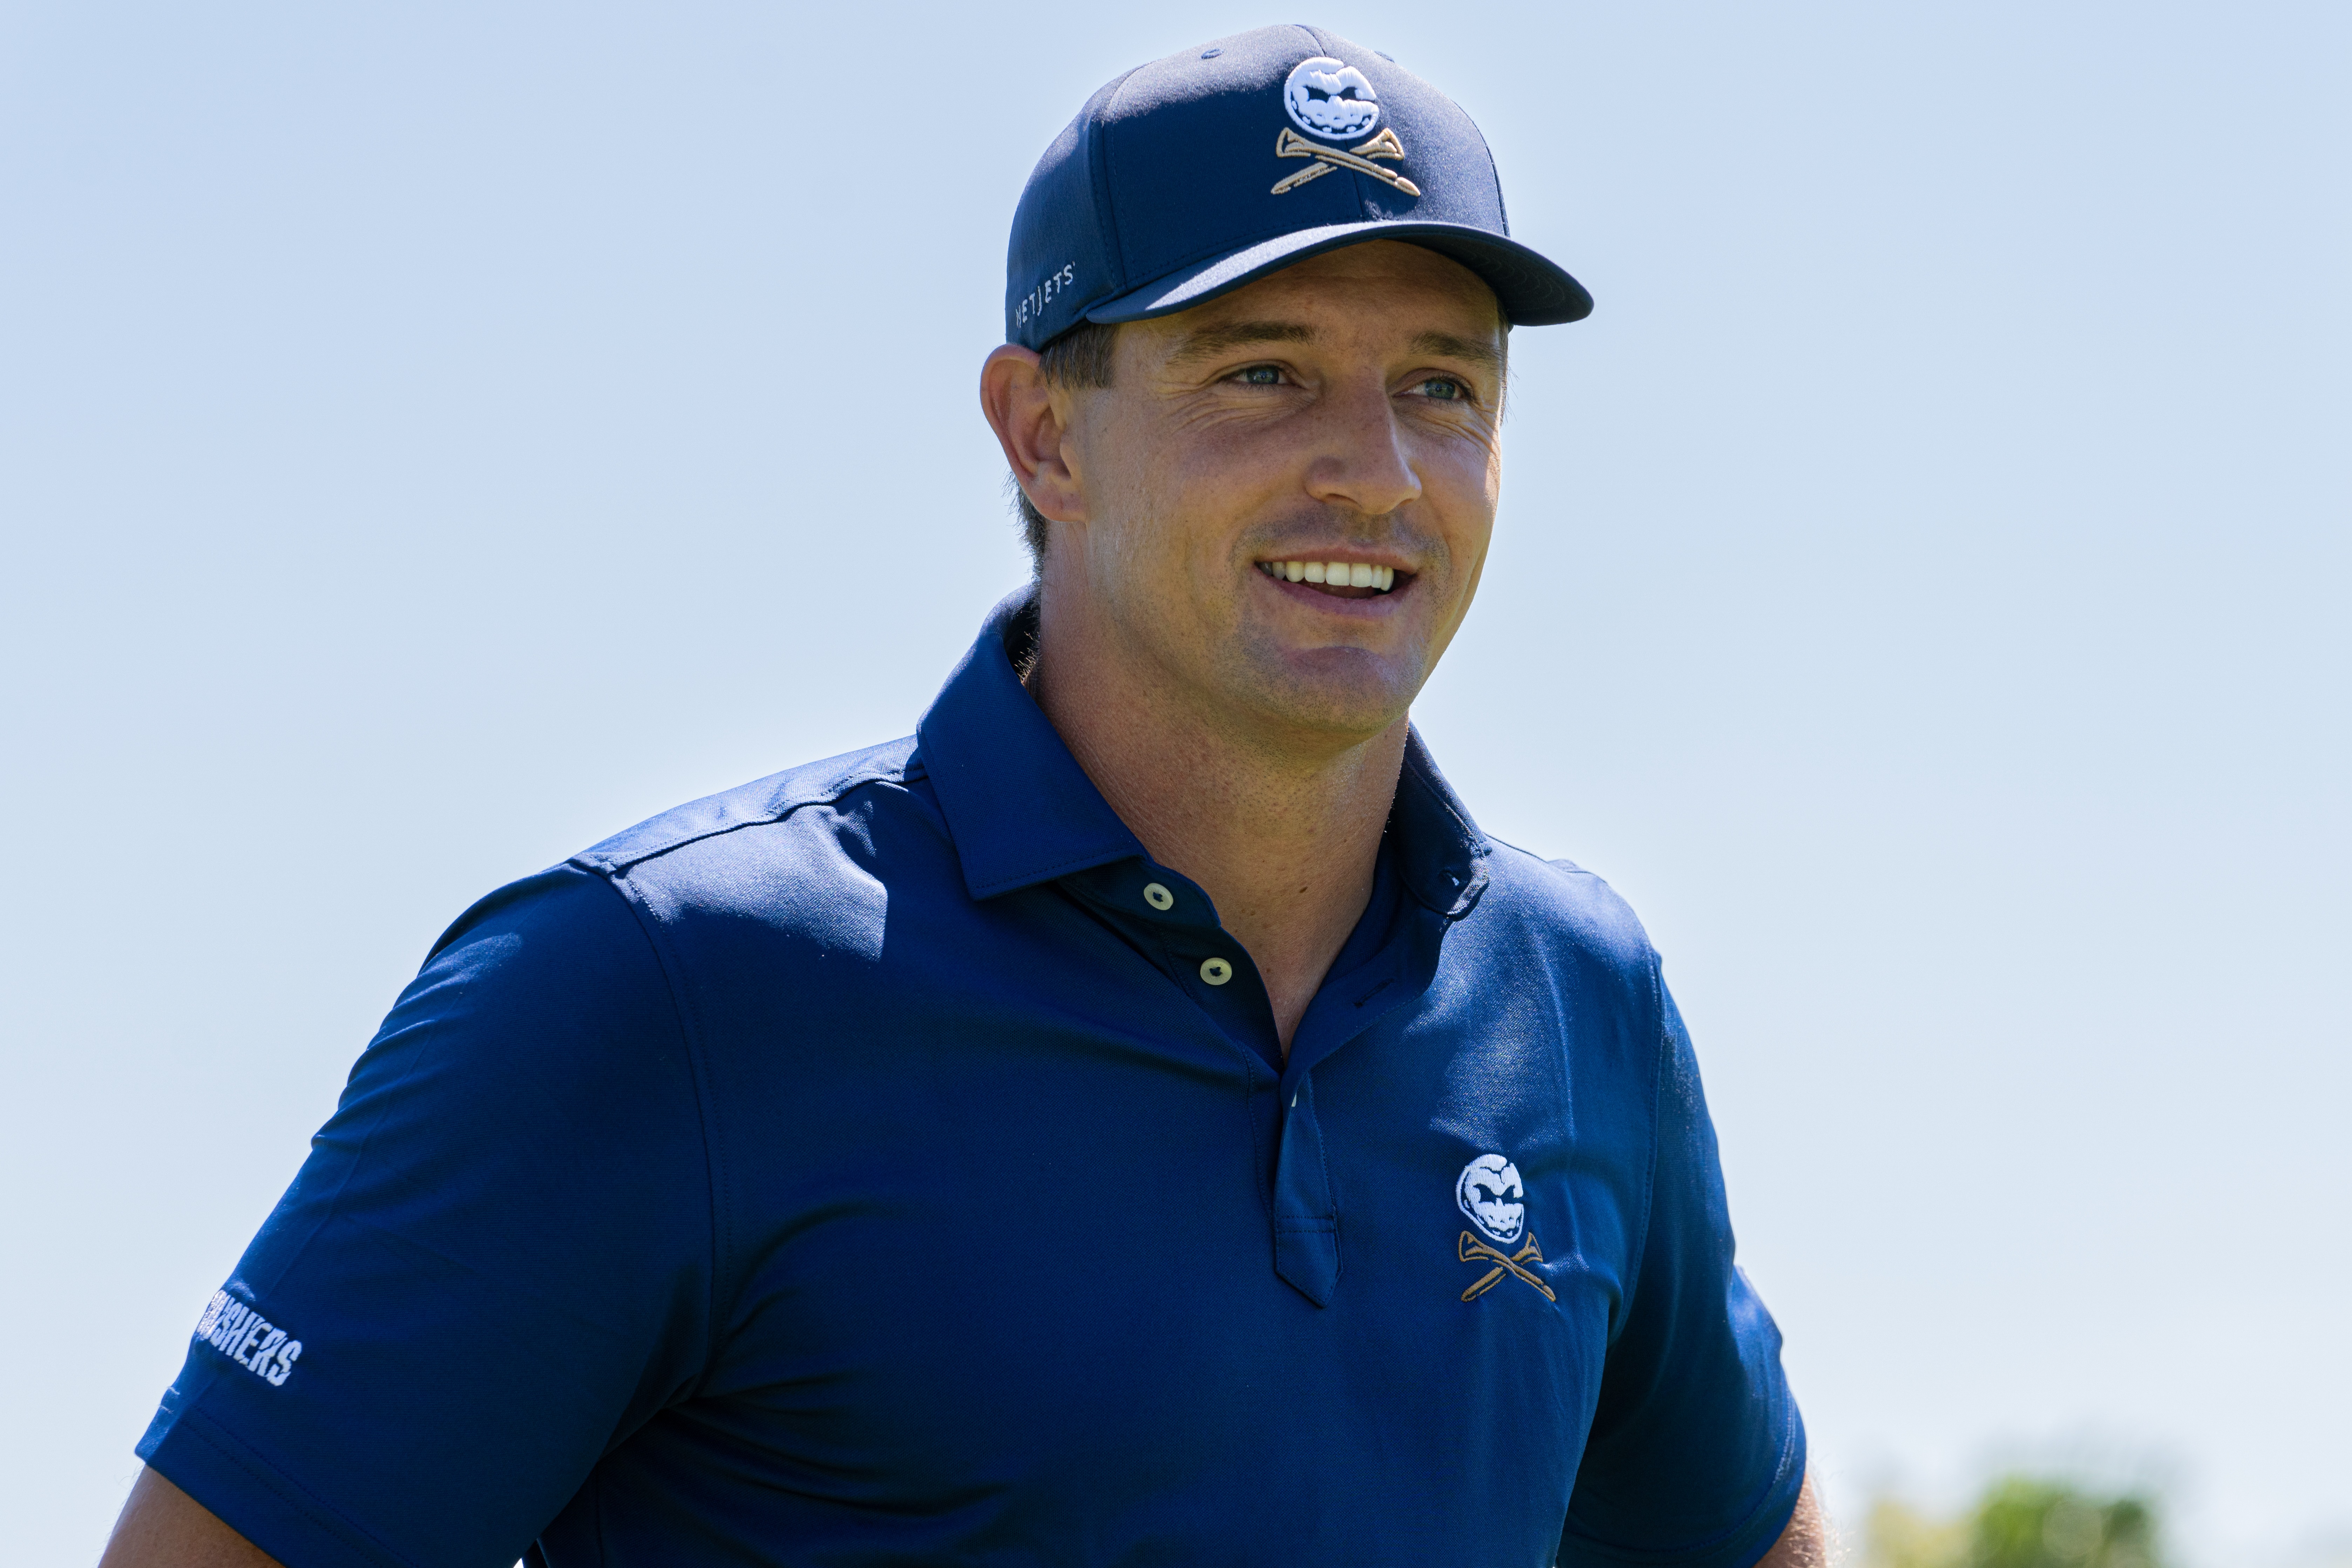 LIV golfers add betting dynamic to Masters - The San Diego Union